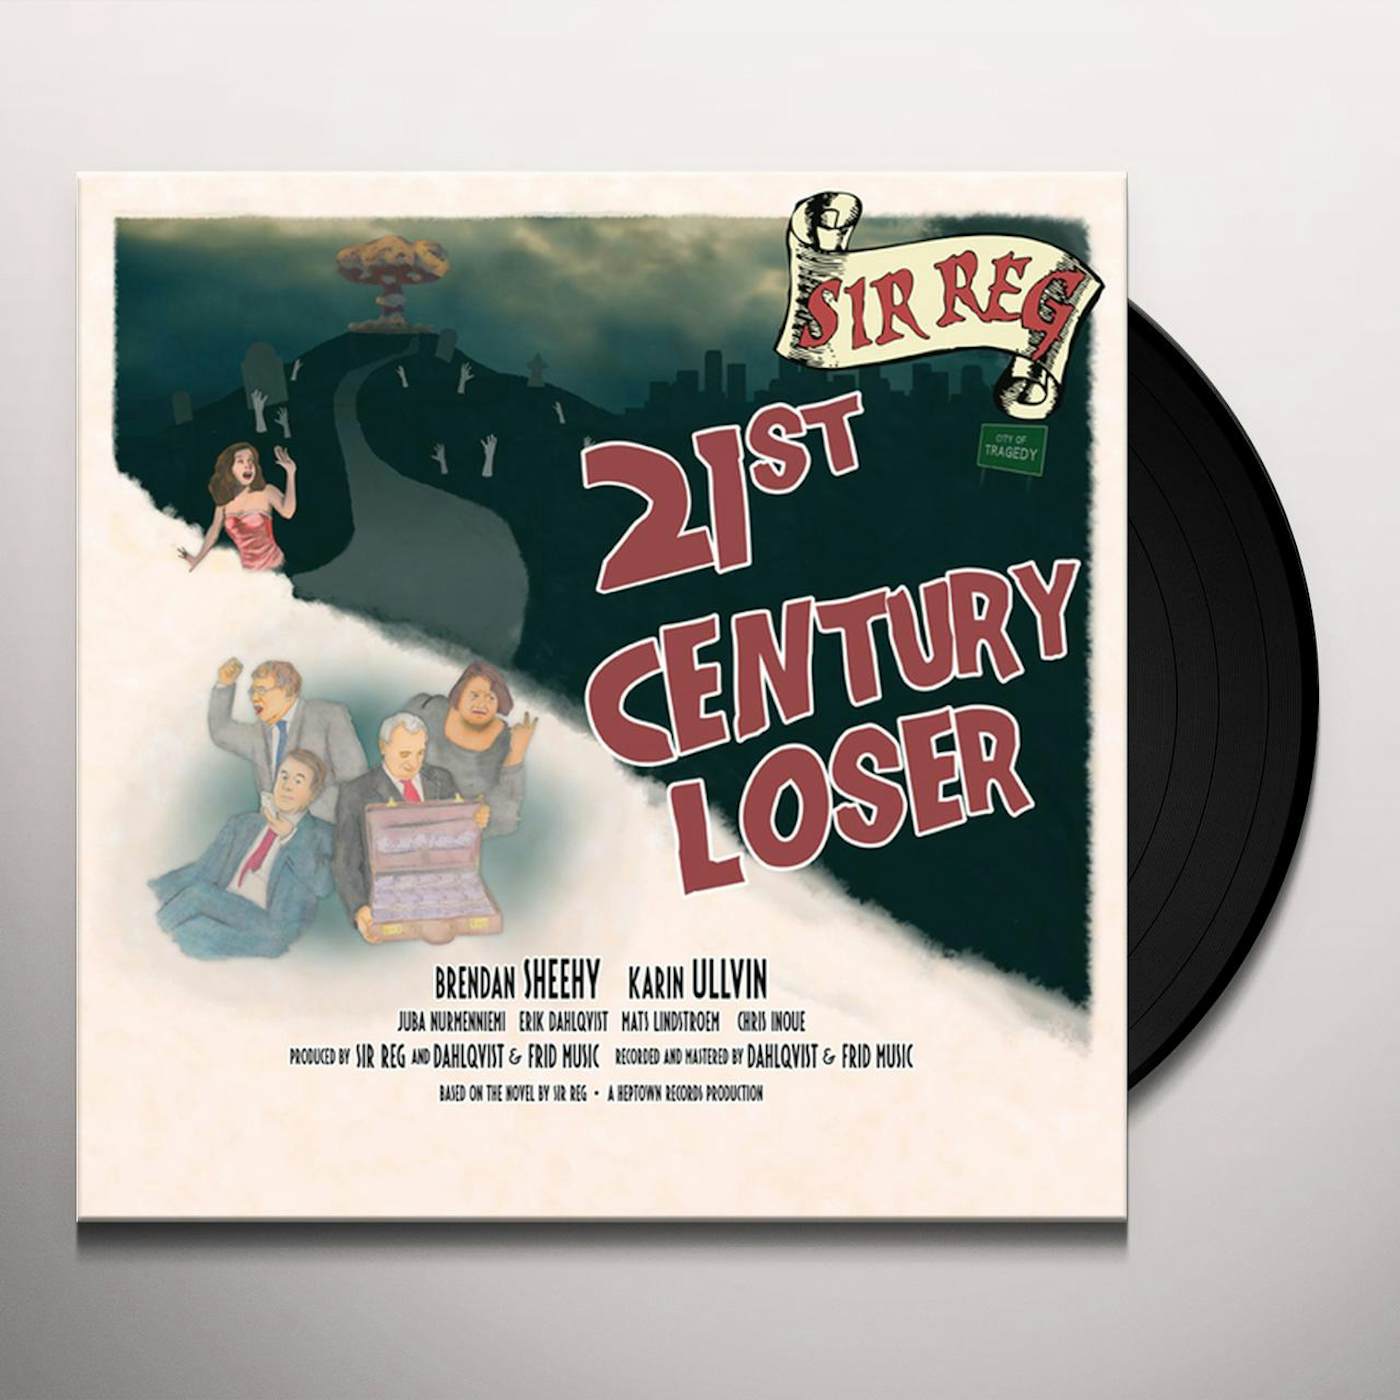 Sir Reg 21 St Century Loser Vinyl Record